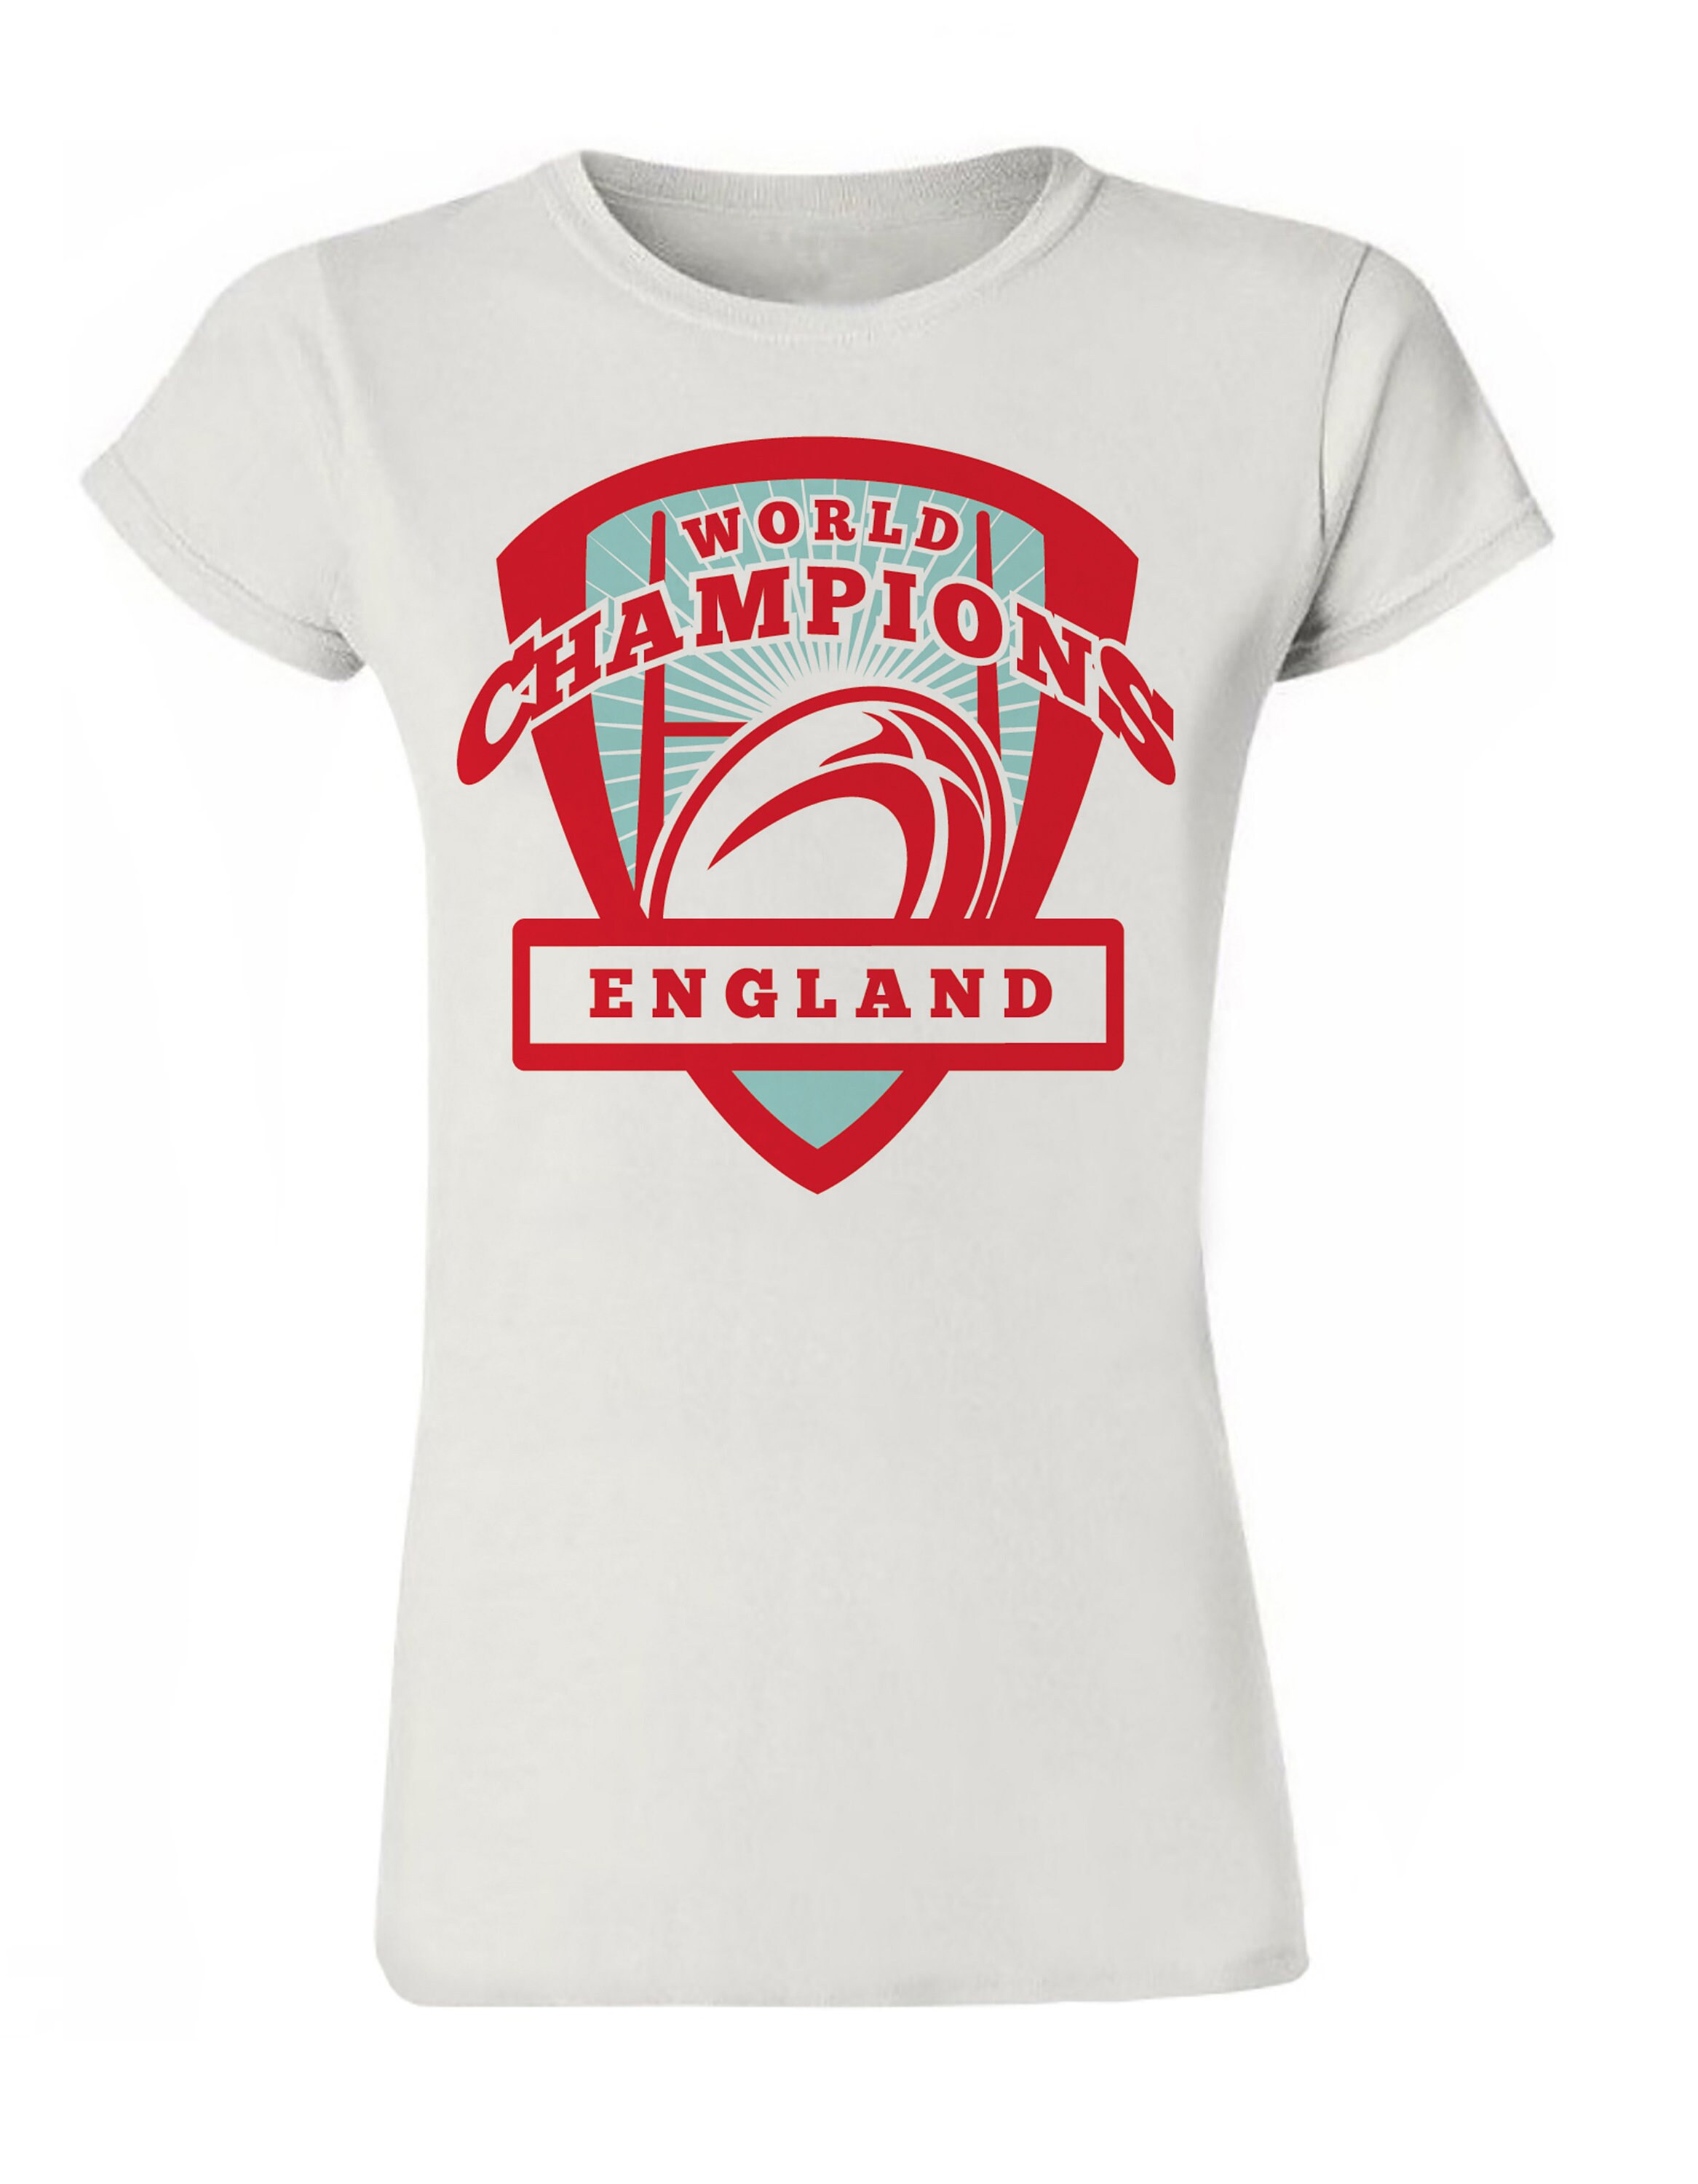 Discover England World Cup Champions T-Shirt, England Football Shirt Q127